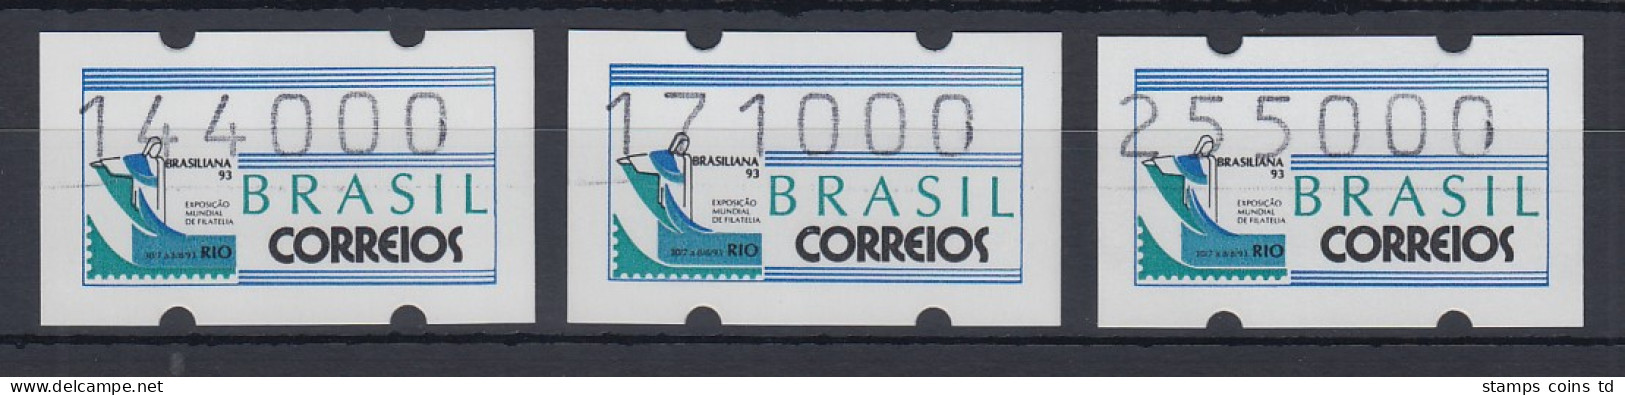 Brasilien Klüssendorf-ATM 1993 BRASILIANA Mi-Nr 5 Satz 144000-171000-255000 ** - Automatenmarken (Frama)